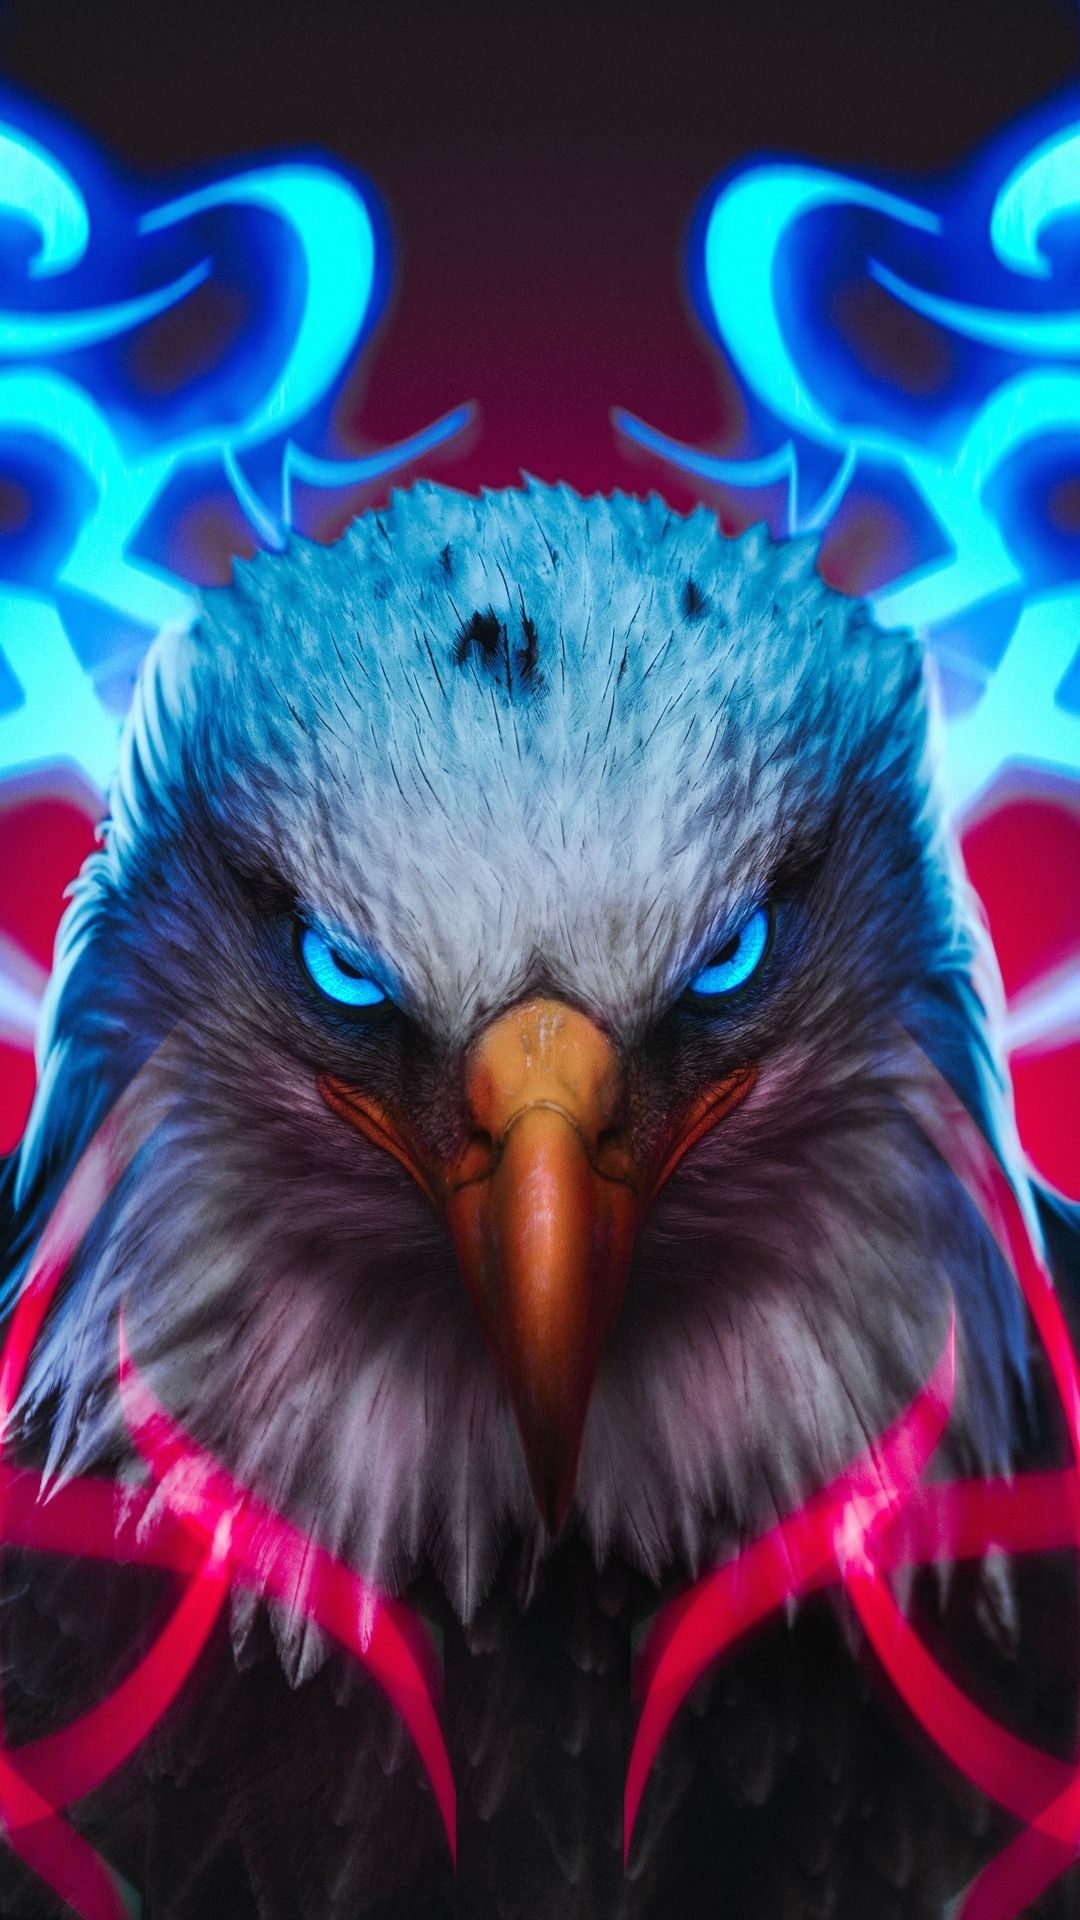 Fonditos. Eagle wallpaper, Eagle picture, Eagle image